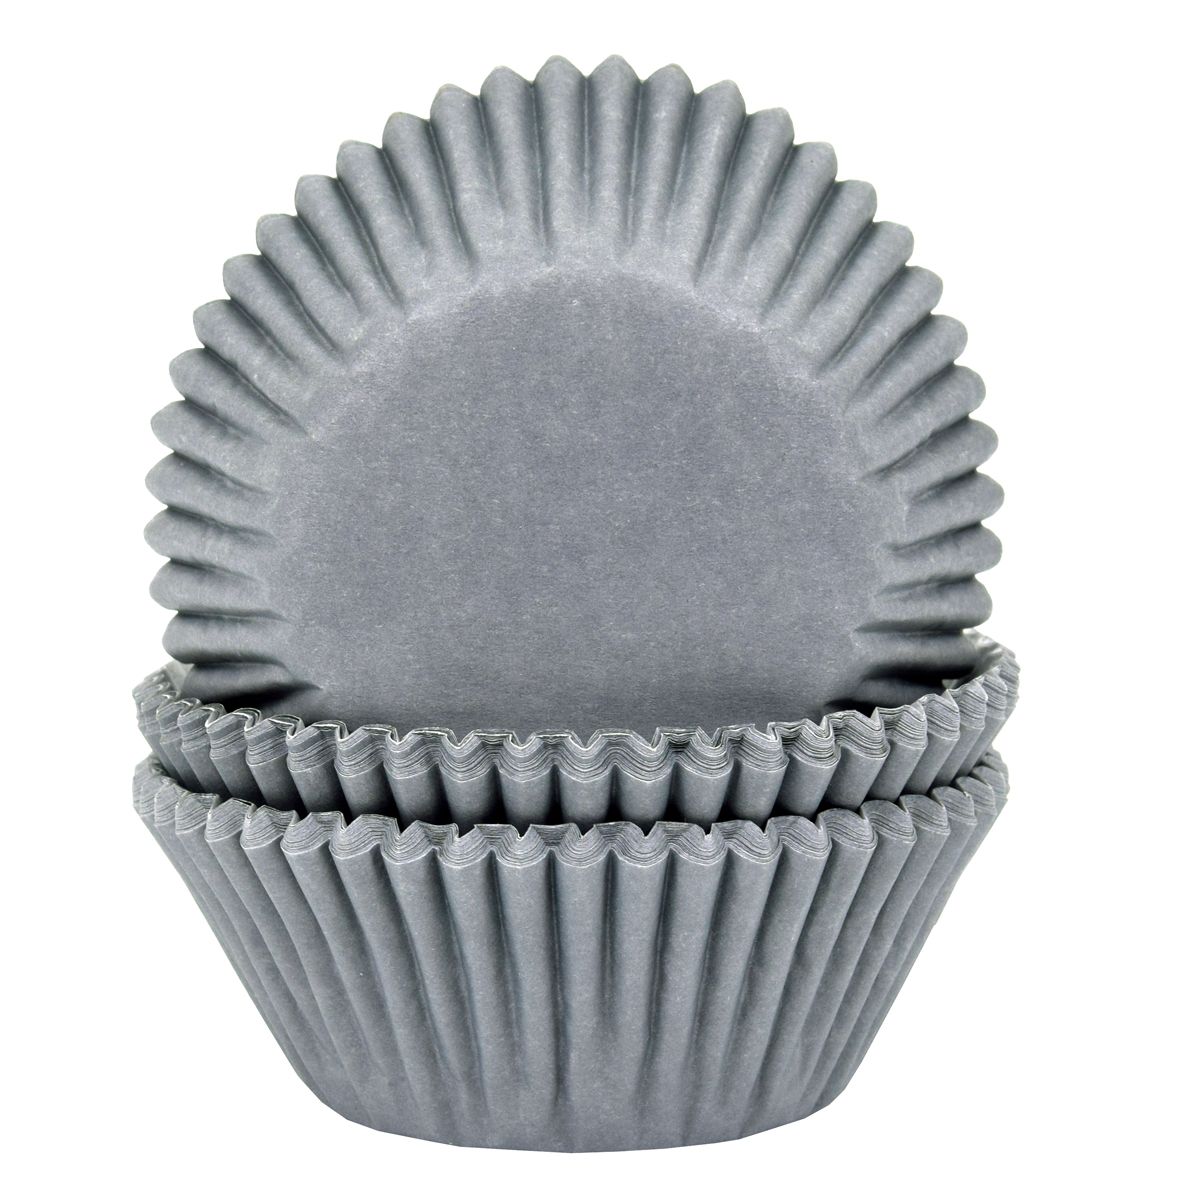 Cupcake baking cupc grijs 50stuks